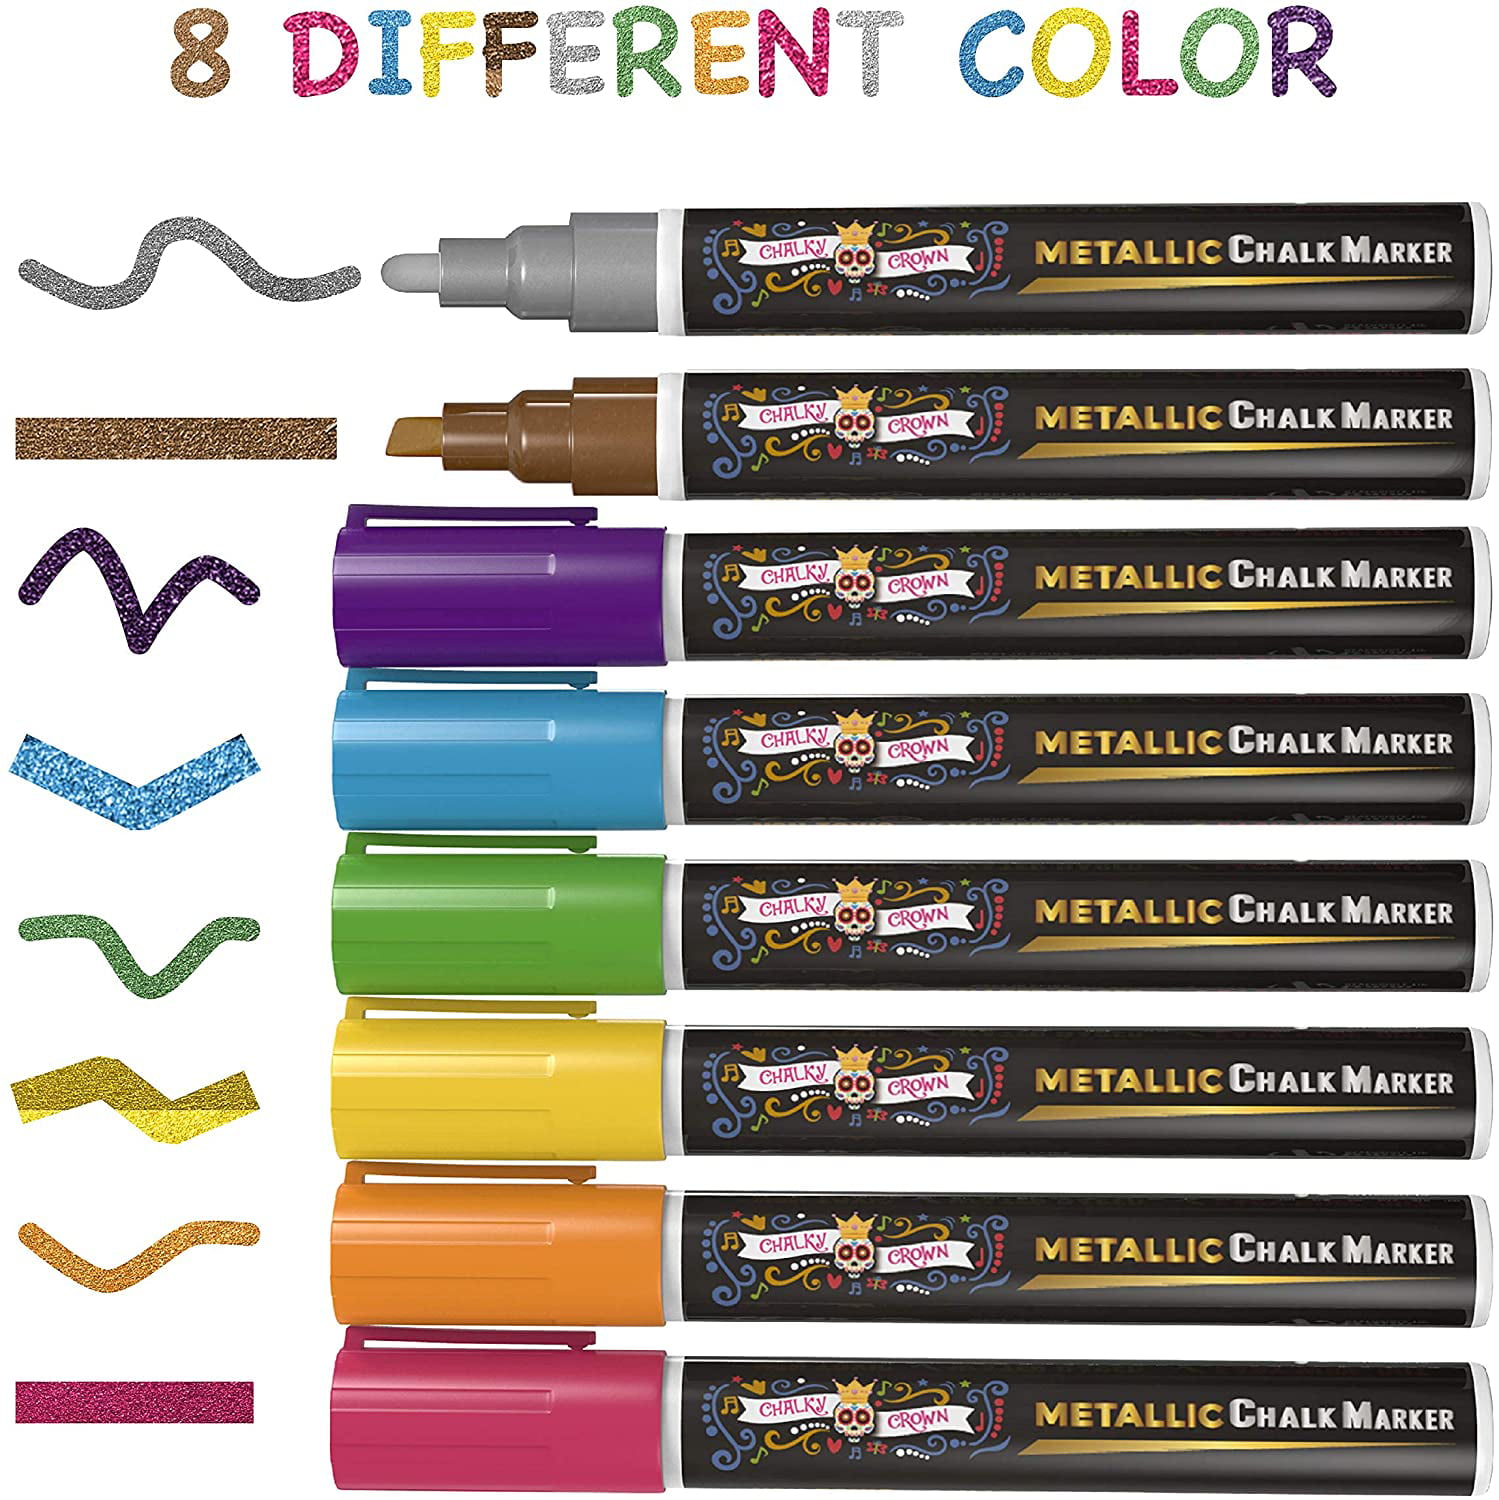 Liquid Chalk Marker Pen - White Dry Erase Marker - Chalk Markers for  Chalkboard Signs, Windows, Blackboard, Glass - 6mm Reversible Tip (5 Pack)  - 24 Chalkboard Labels Included - The Batch Lady